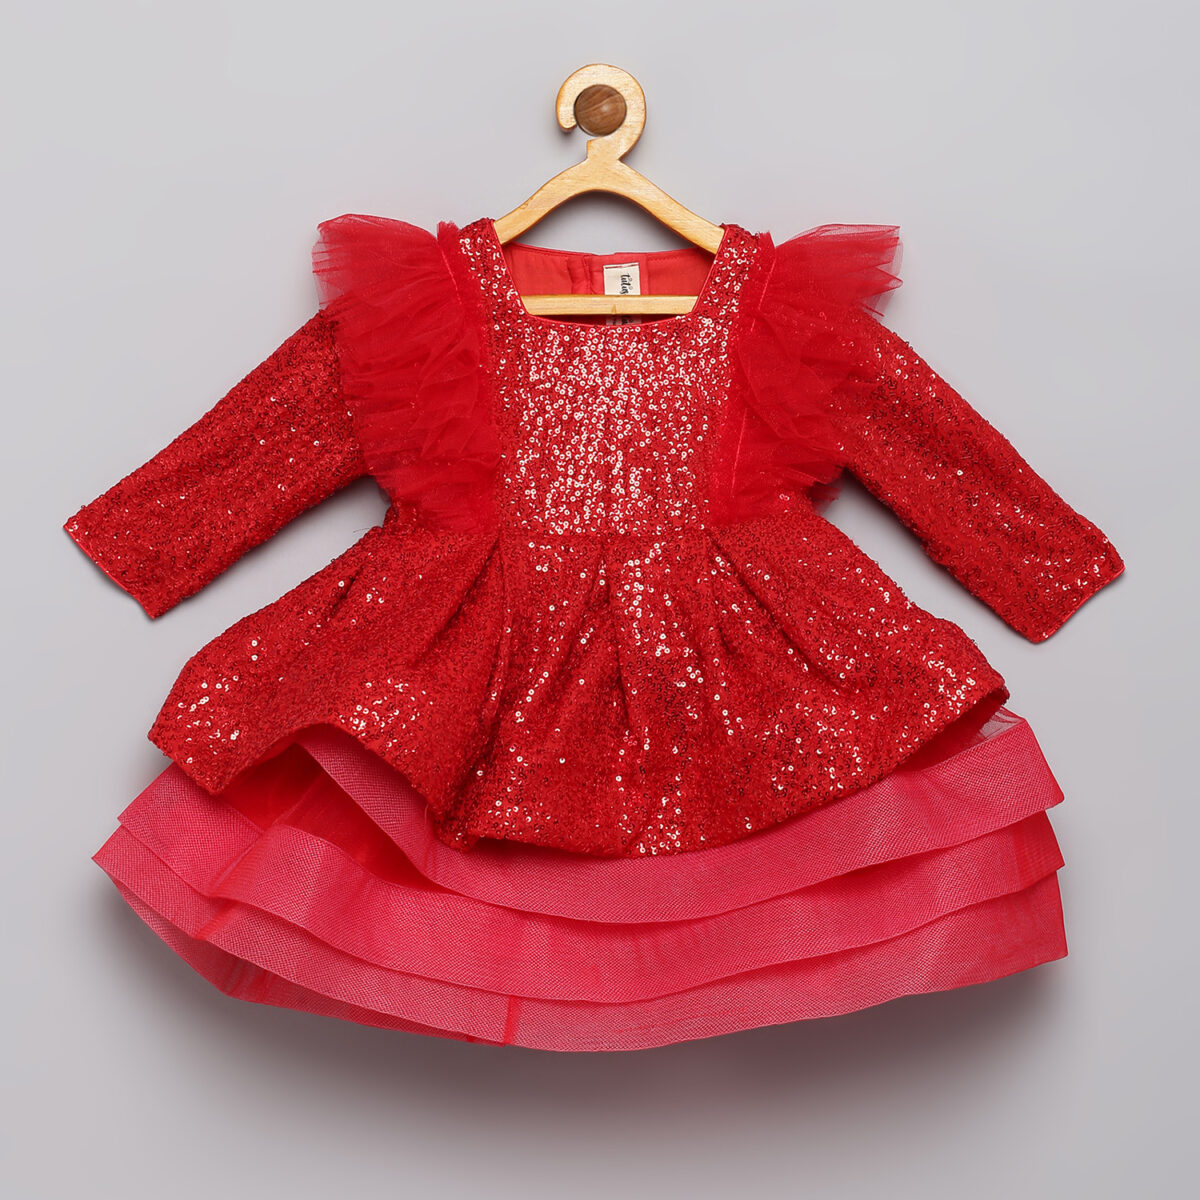 1 Red Sequins Ruffle Dress